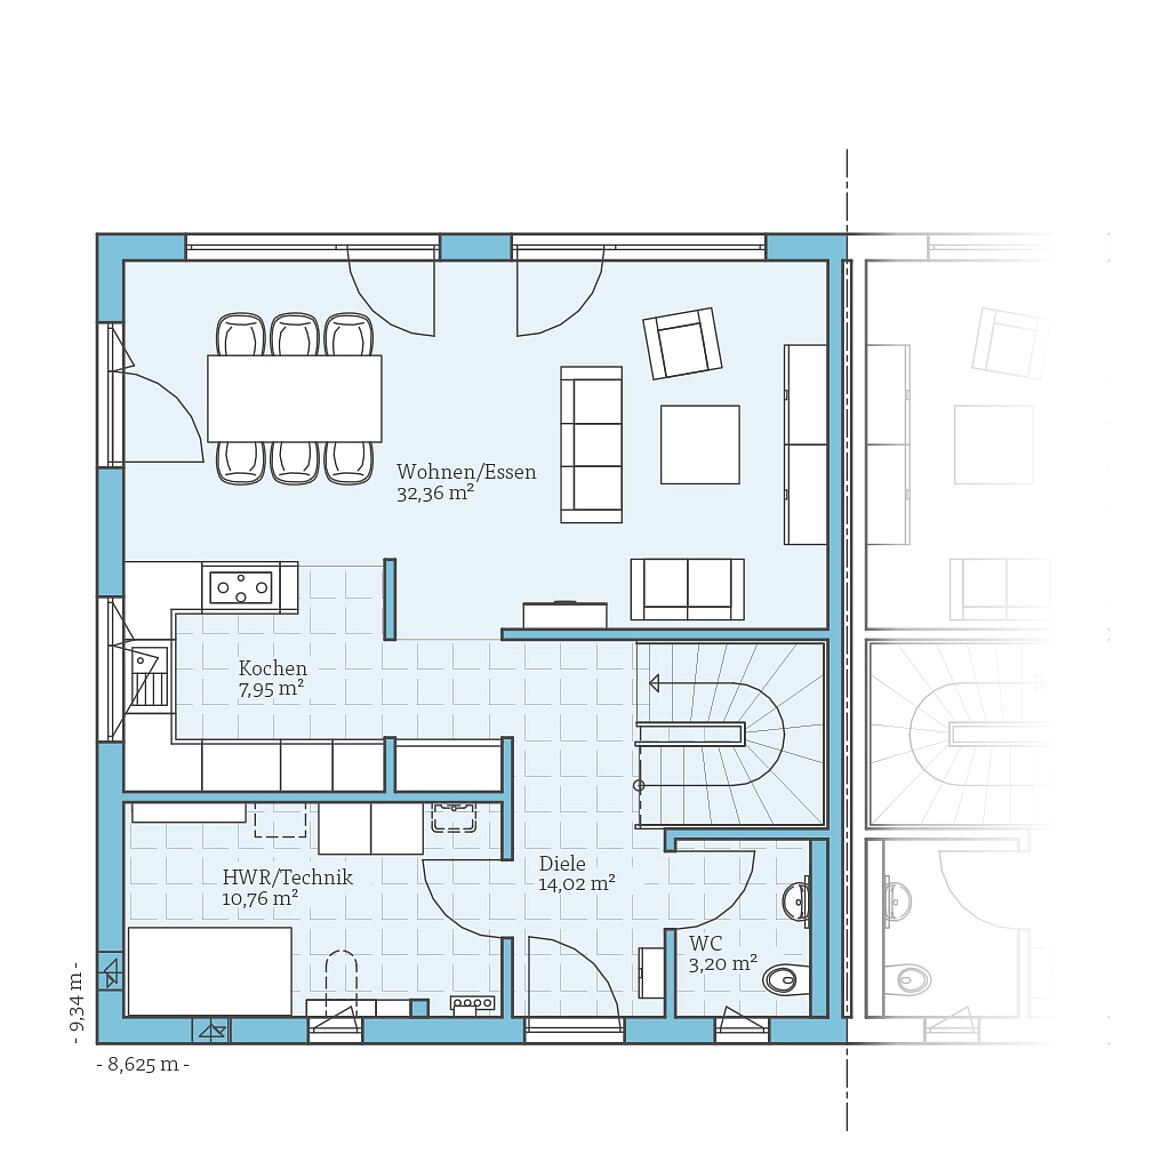 Prefabricated semi-detached house 135: Ground floor plan